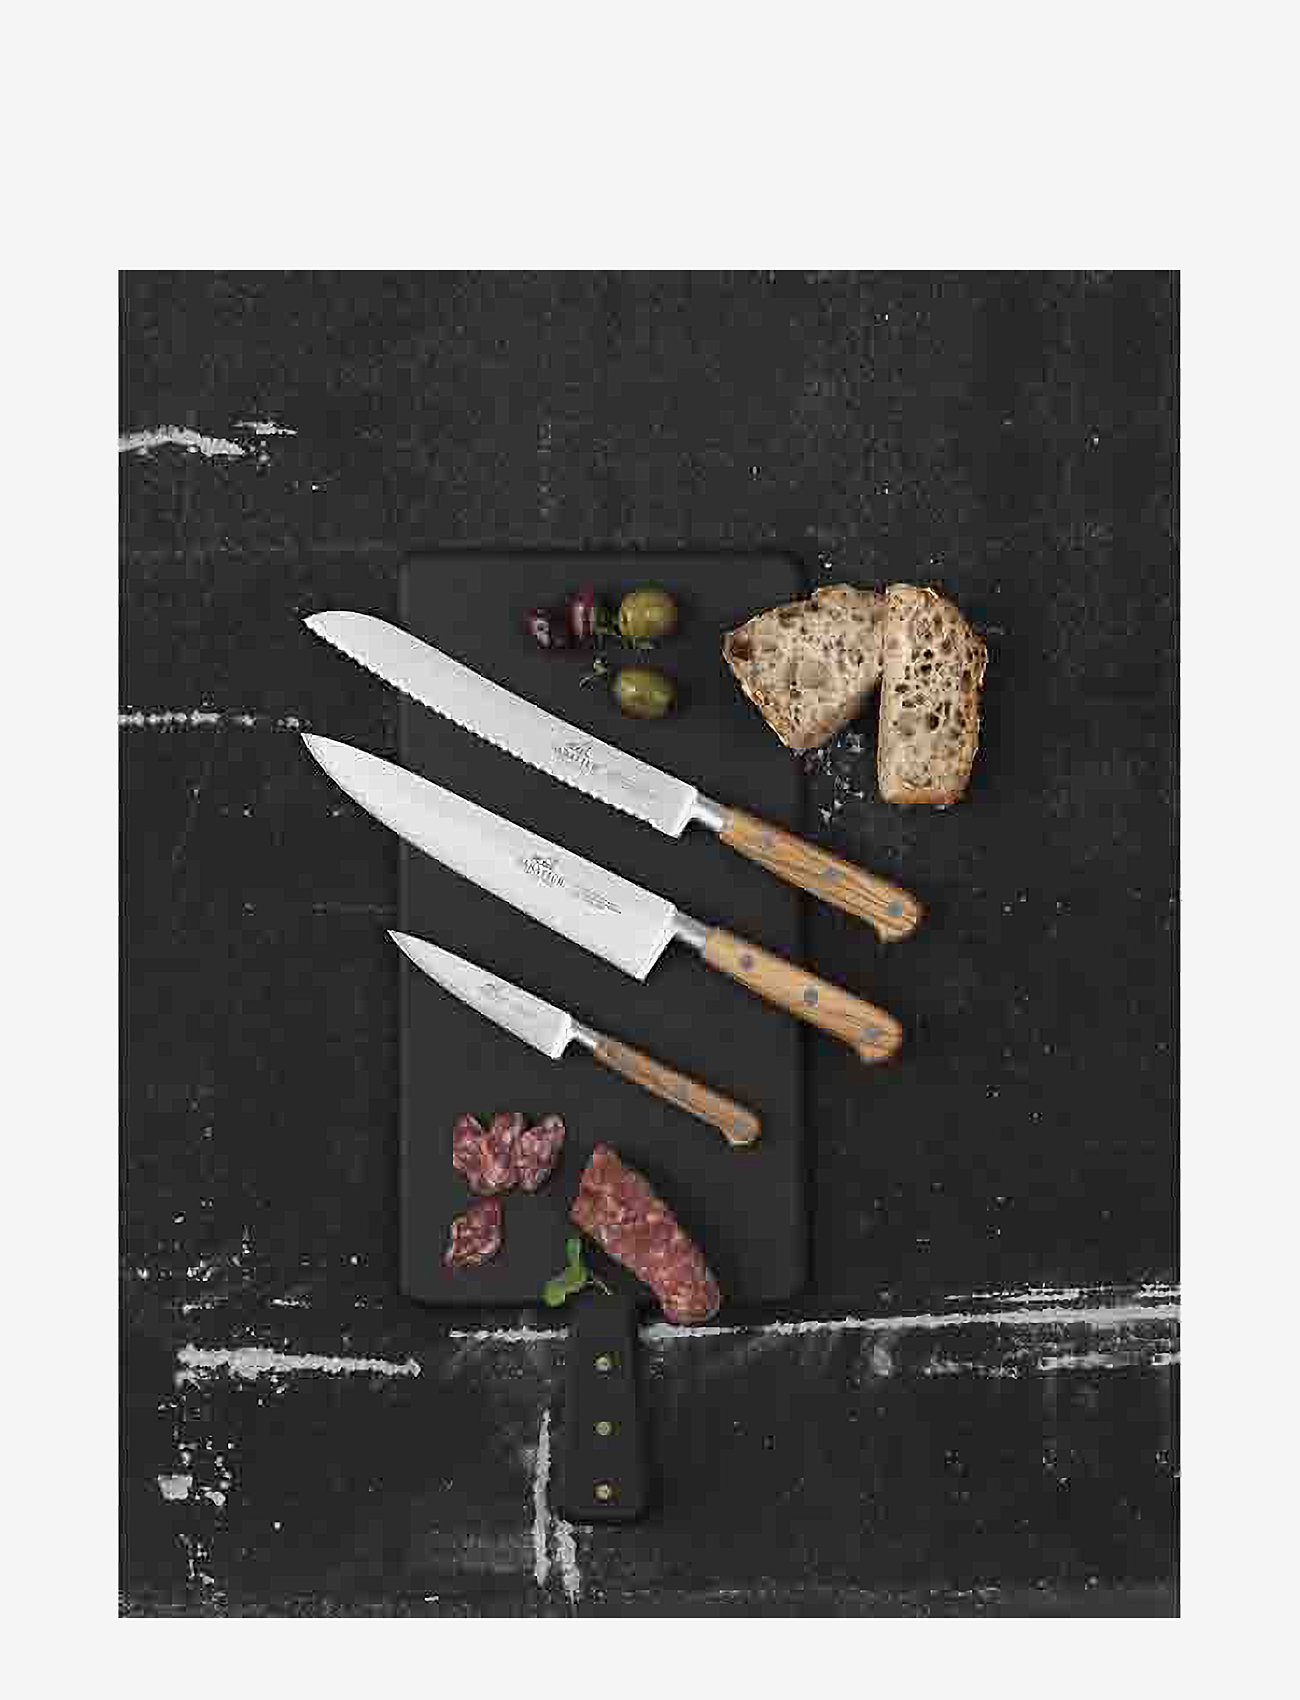 Lion Sabatier - Chef knife Ideal Provence 20cm - chef knives - steel/wood - 1